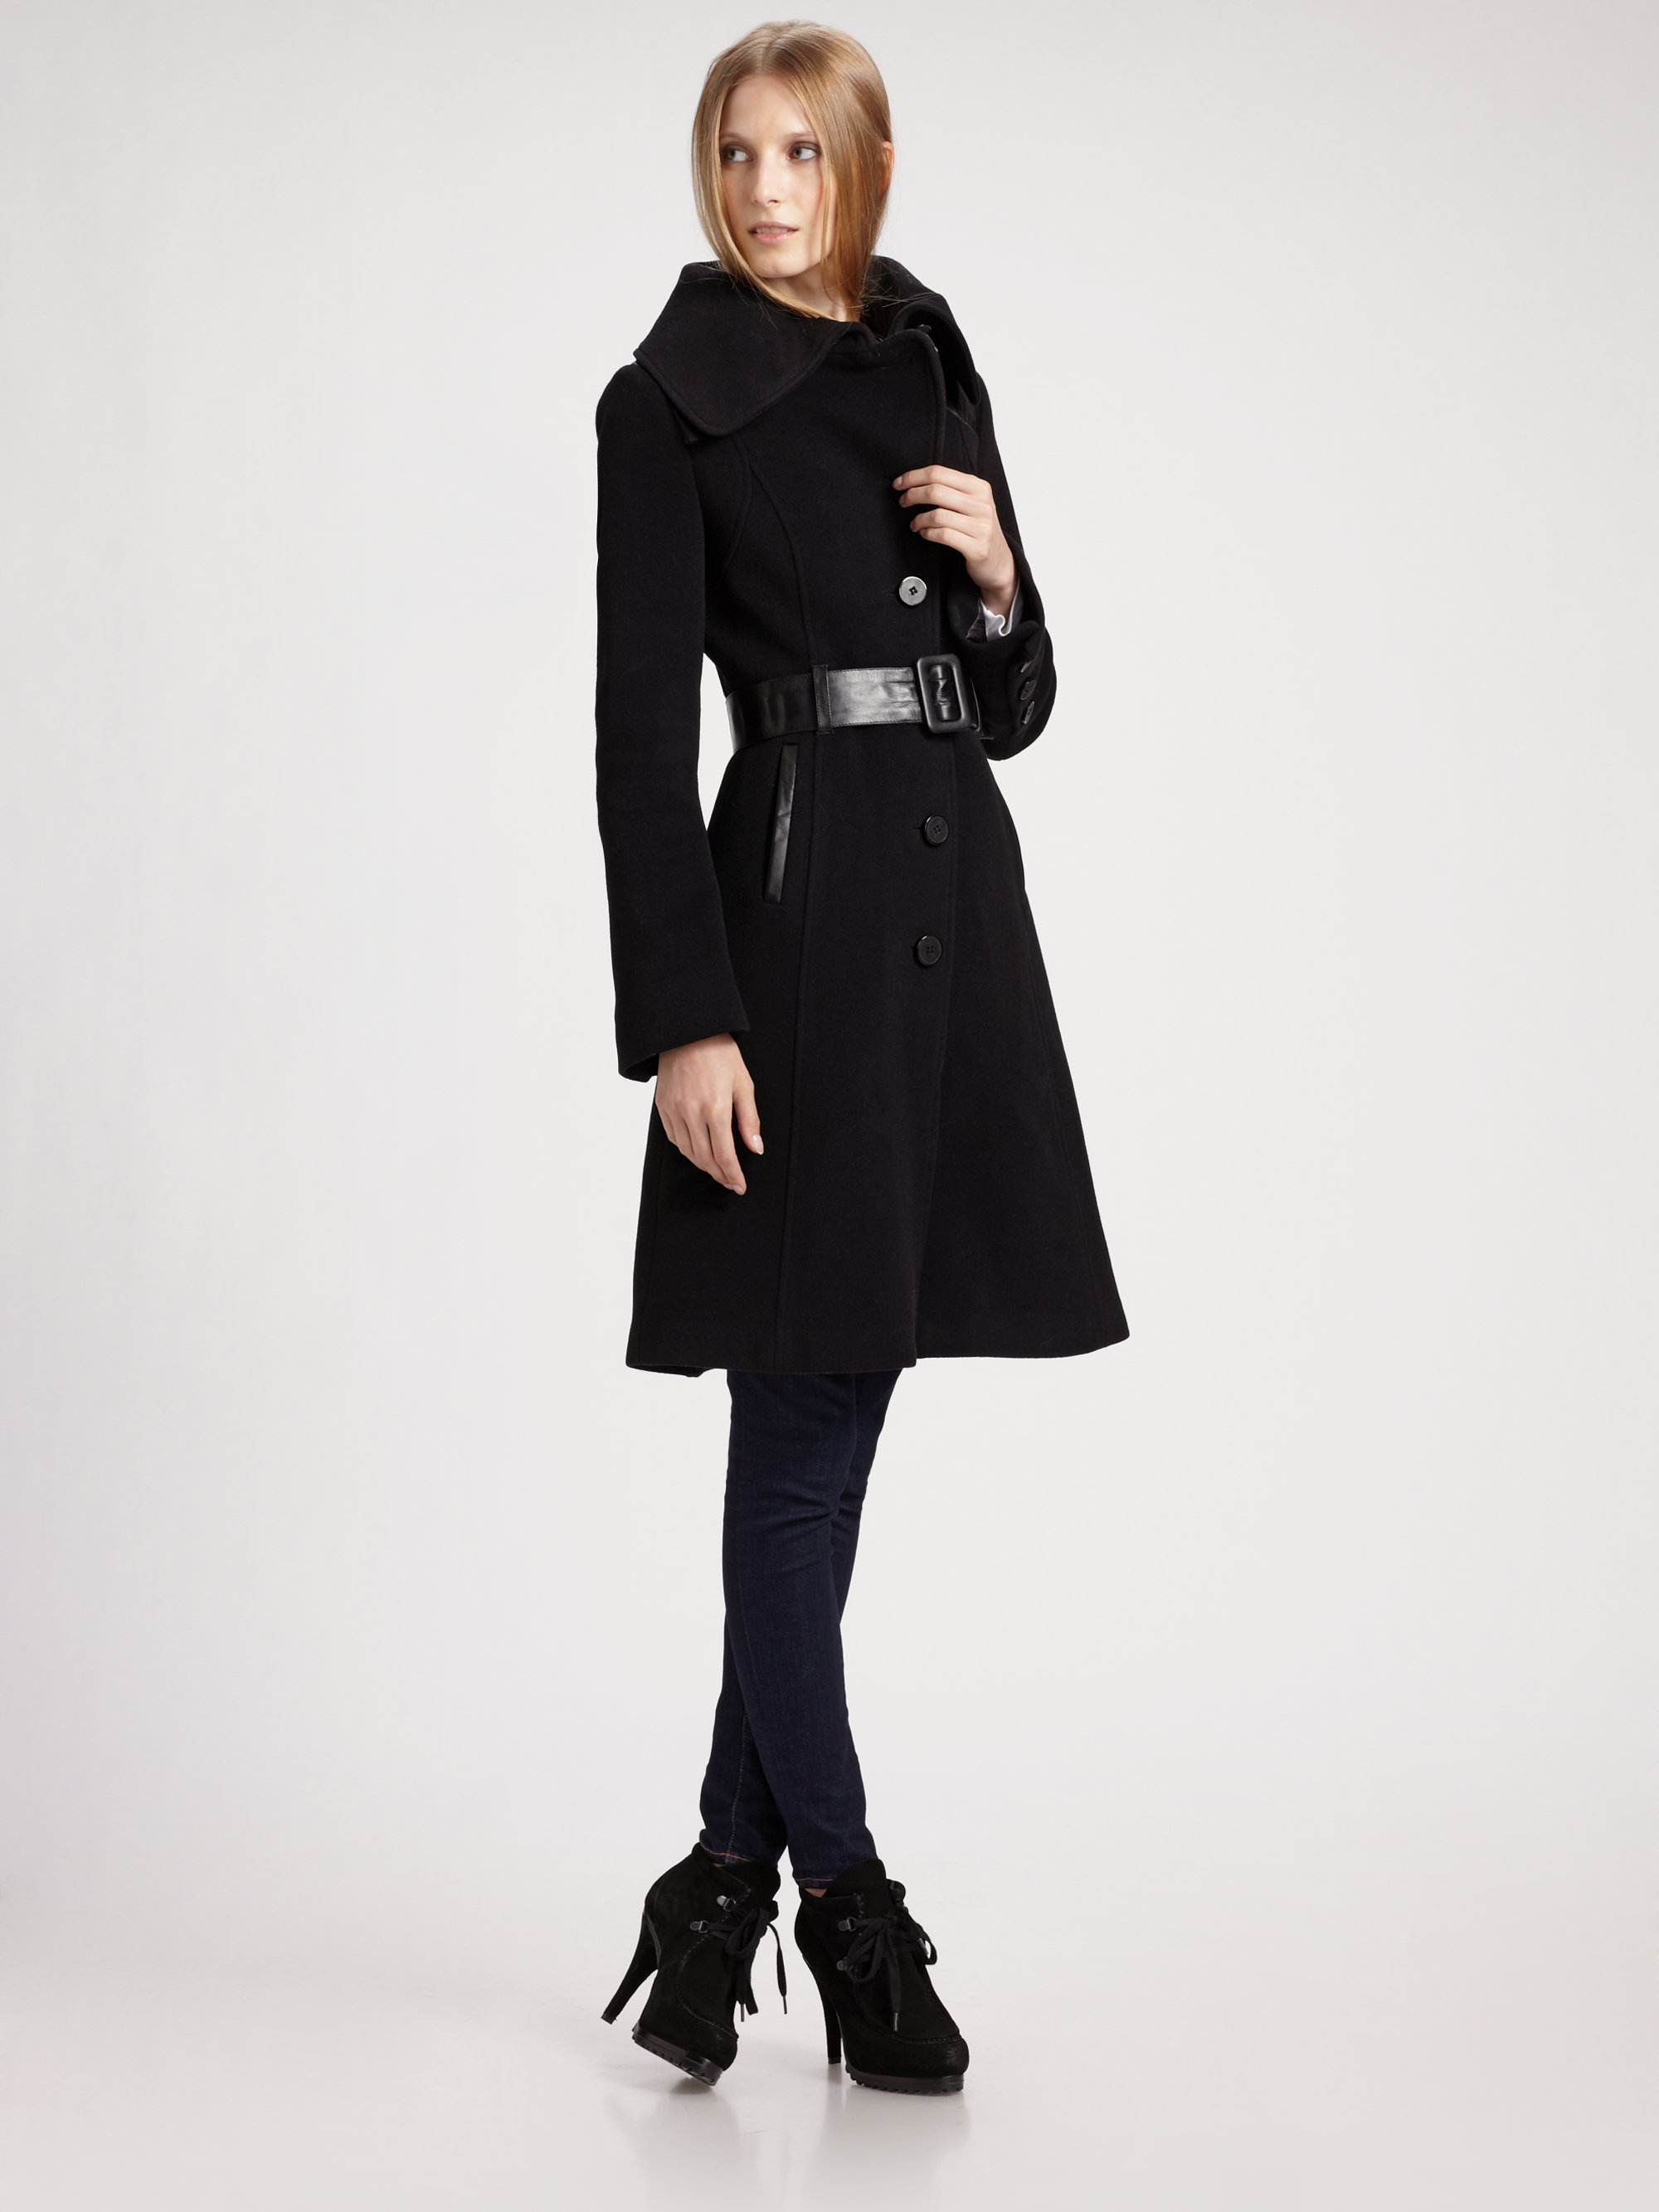 Lyst - Mackage Aline Wool Coat in Black